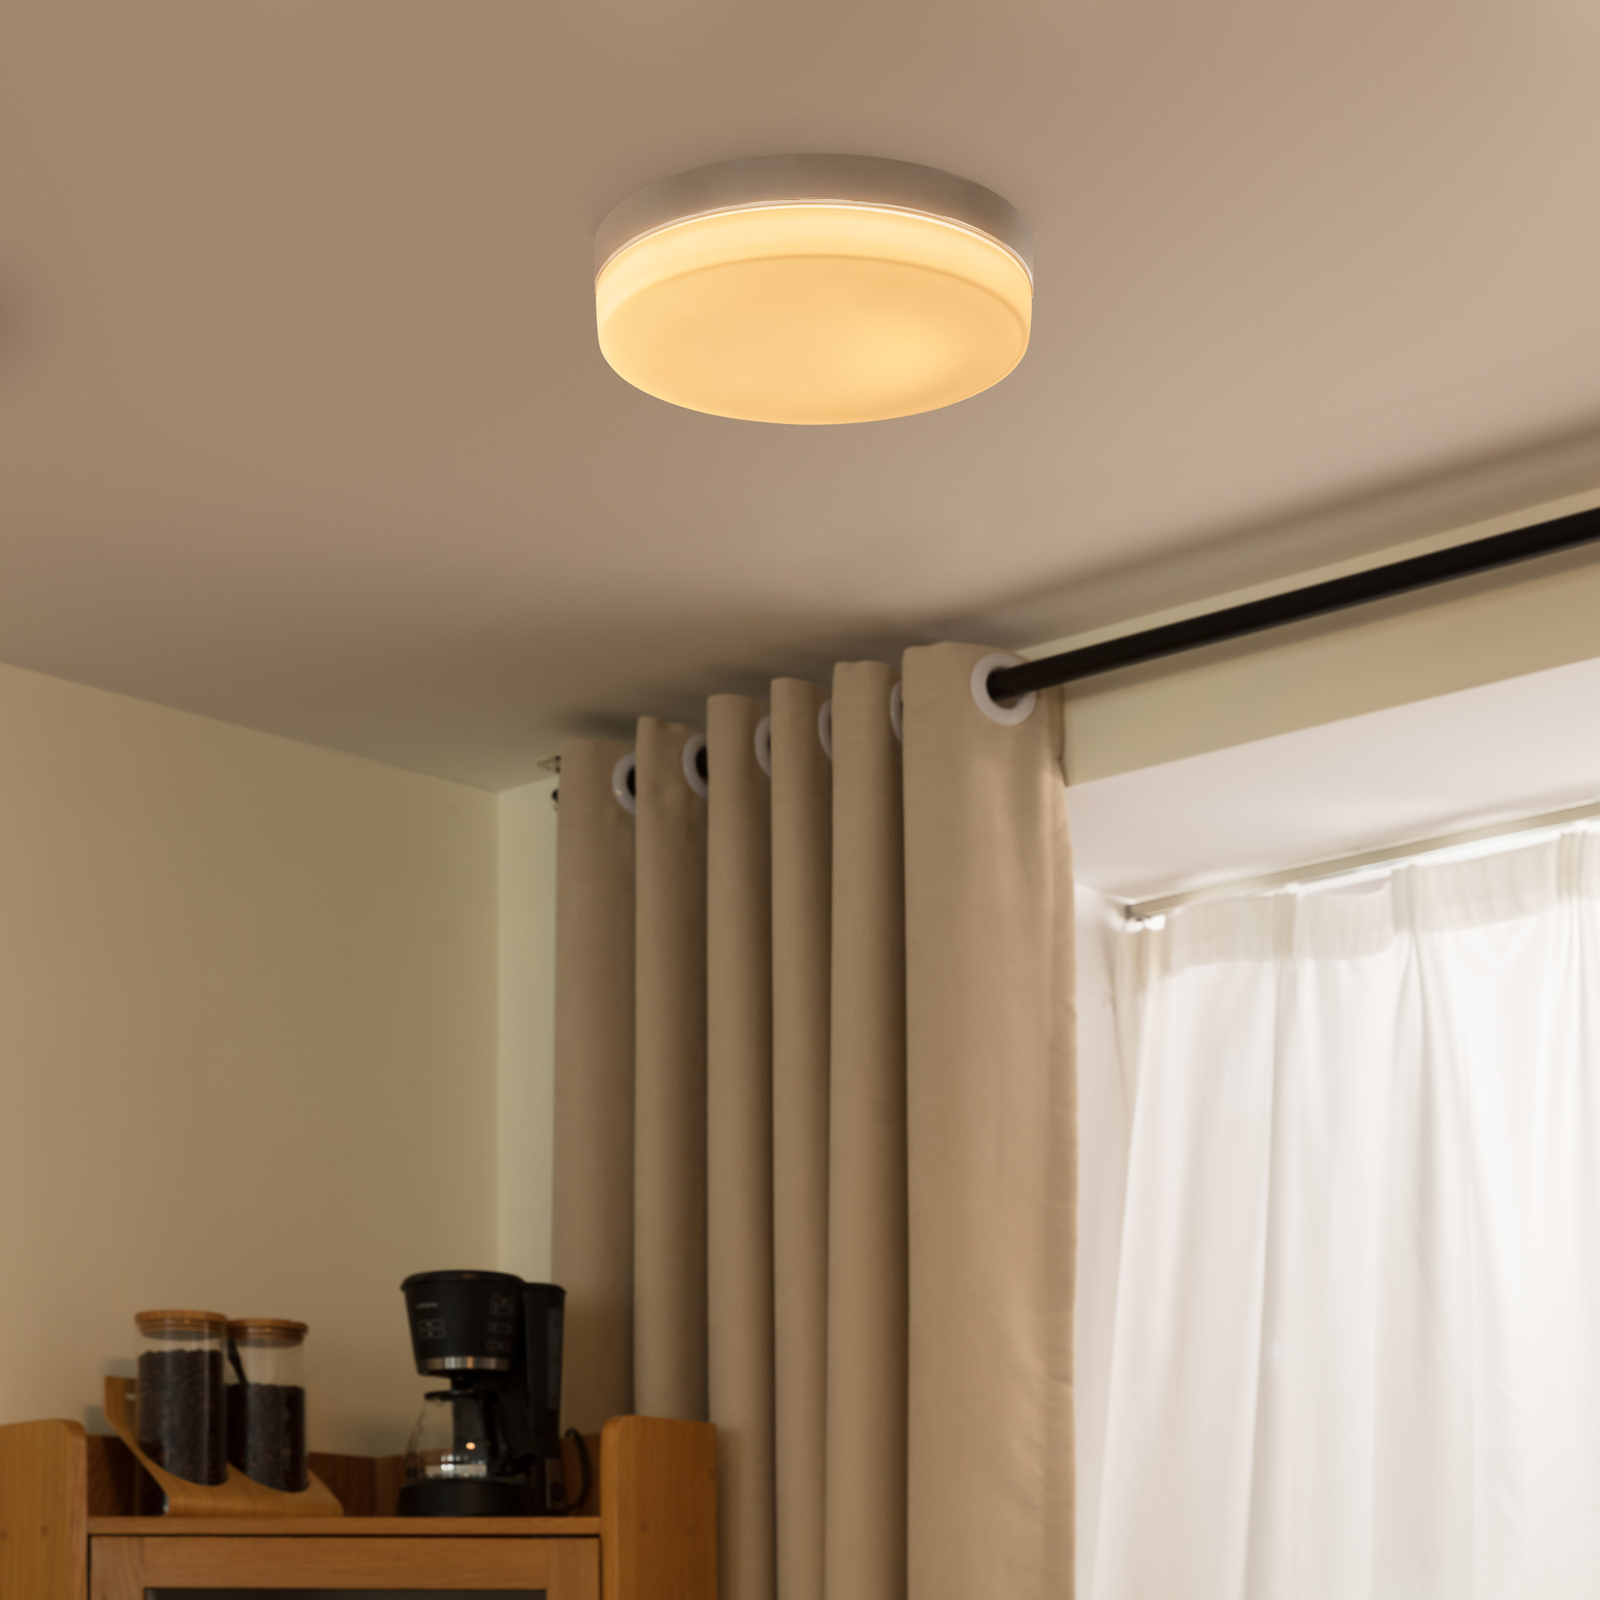 Arcchio Aliras lampa LED do łazienki, chrom, 29 cm